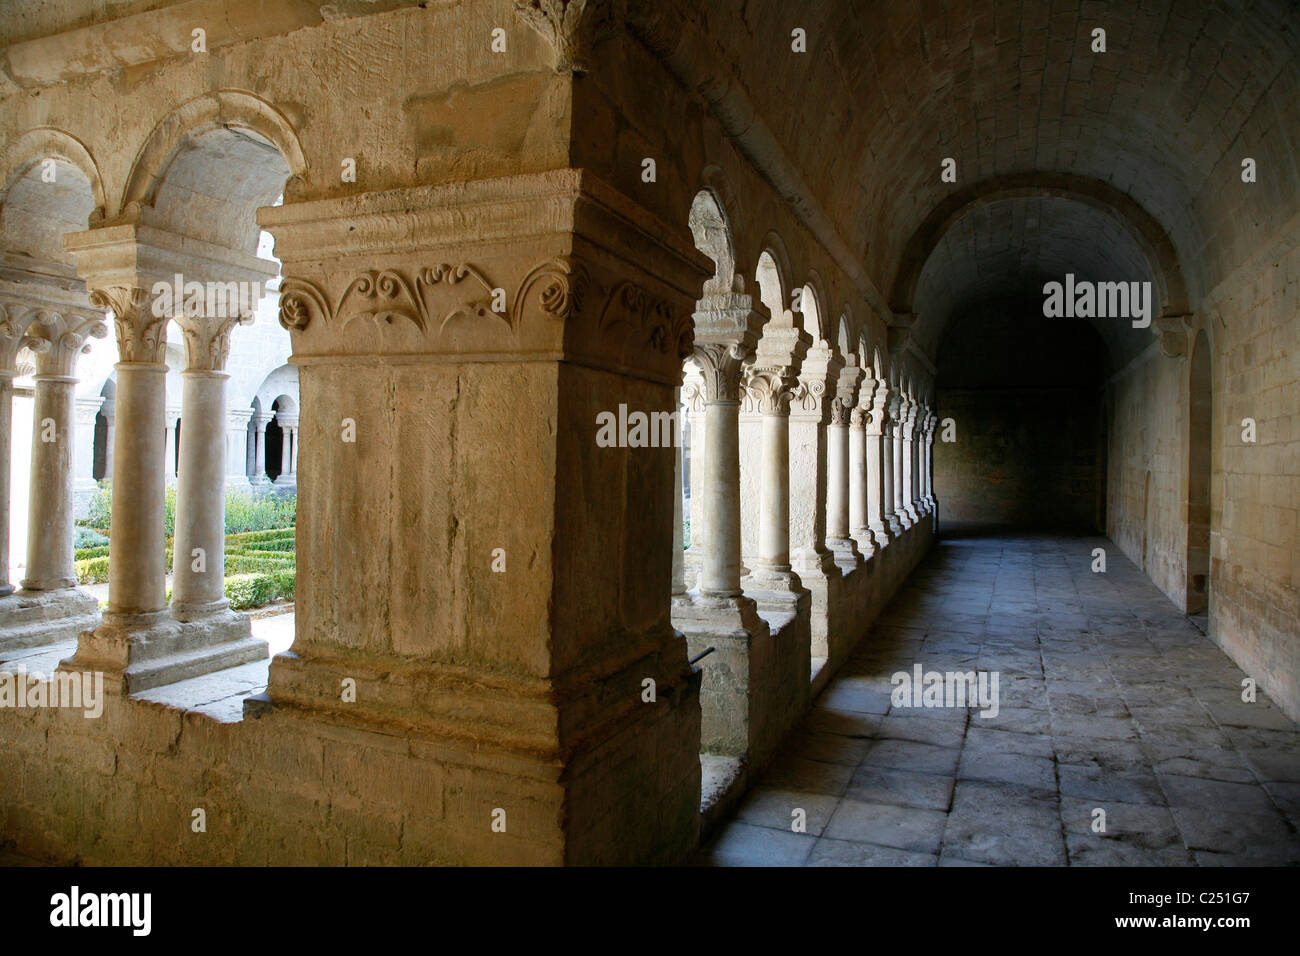 The Cloister, Abbaye de Senanque, Vaucluse, Provence, France. Stock Photo